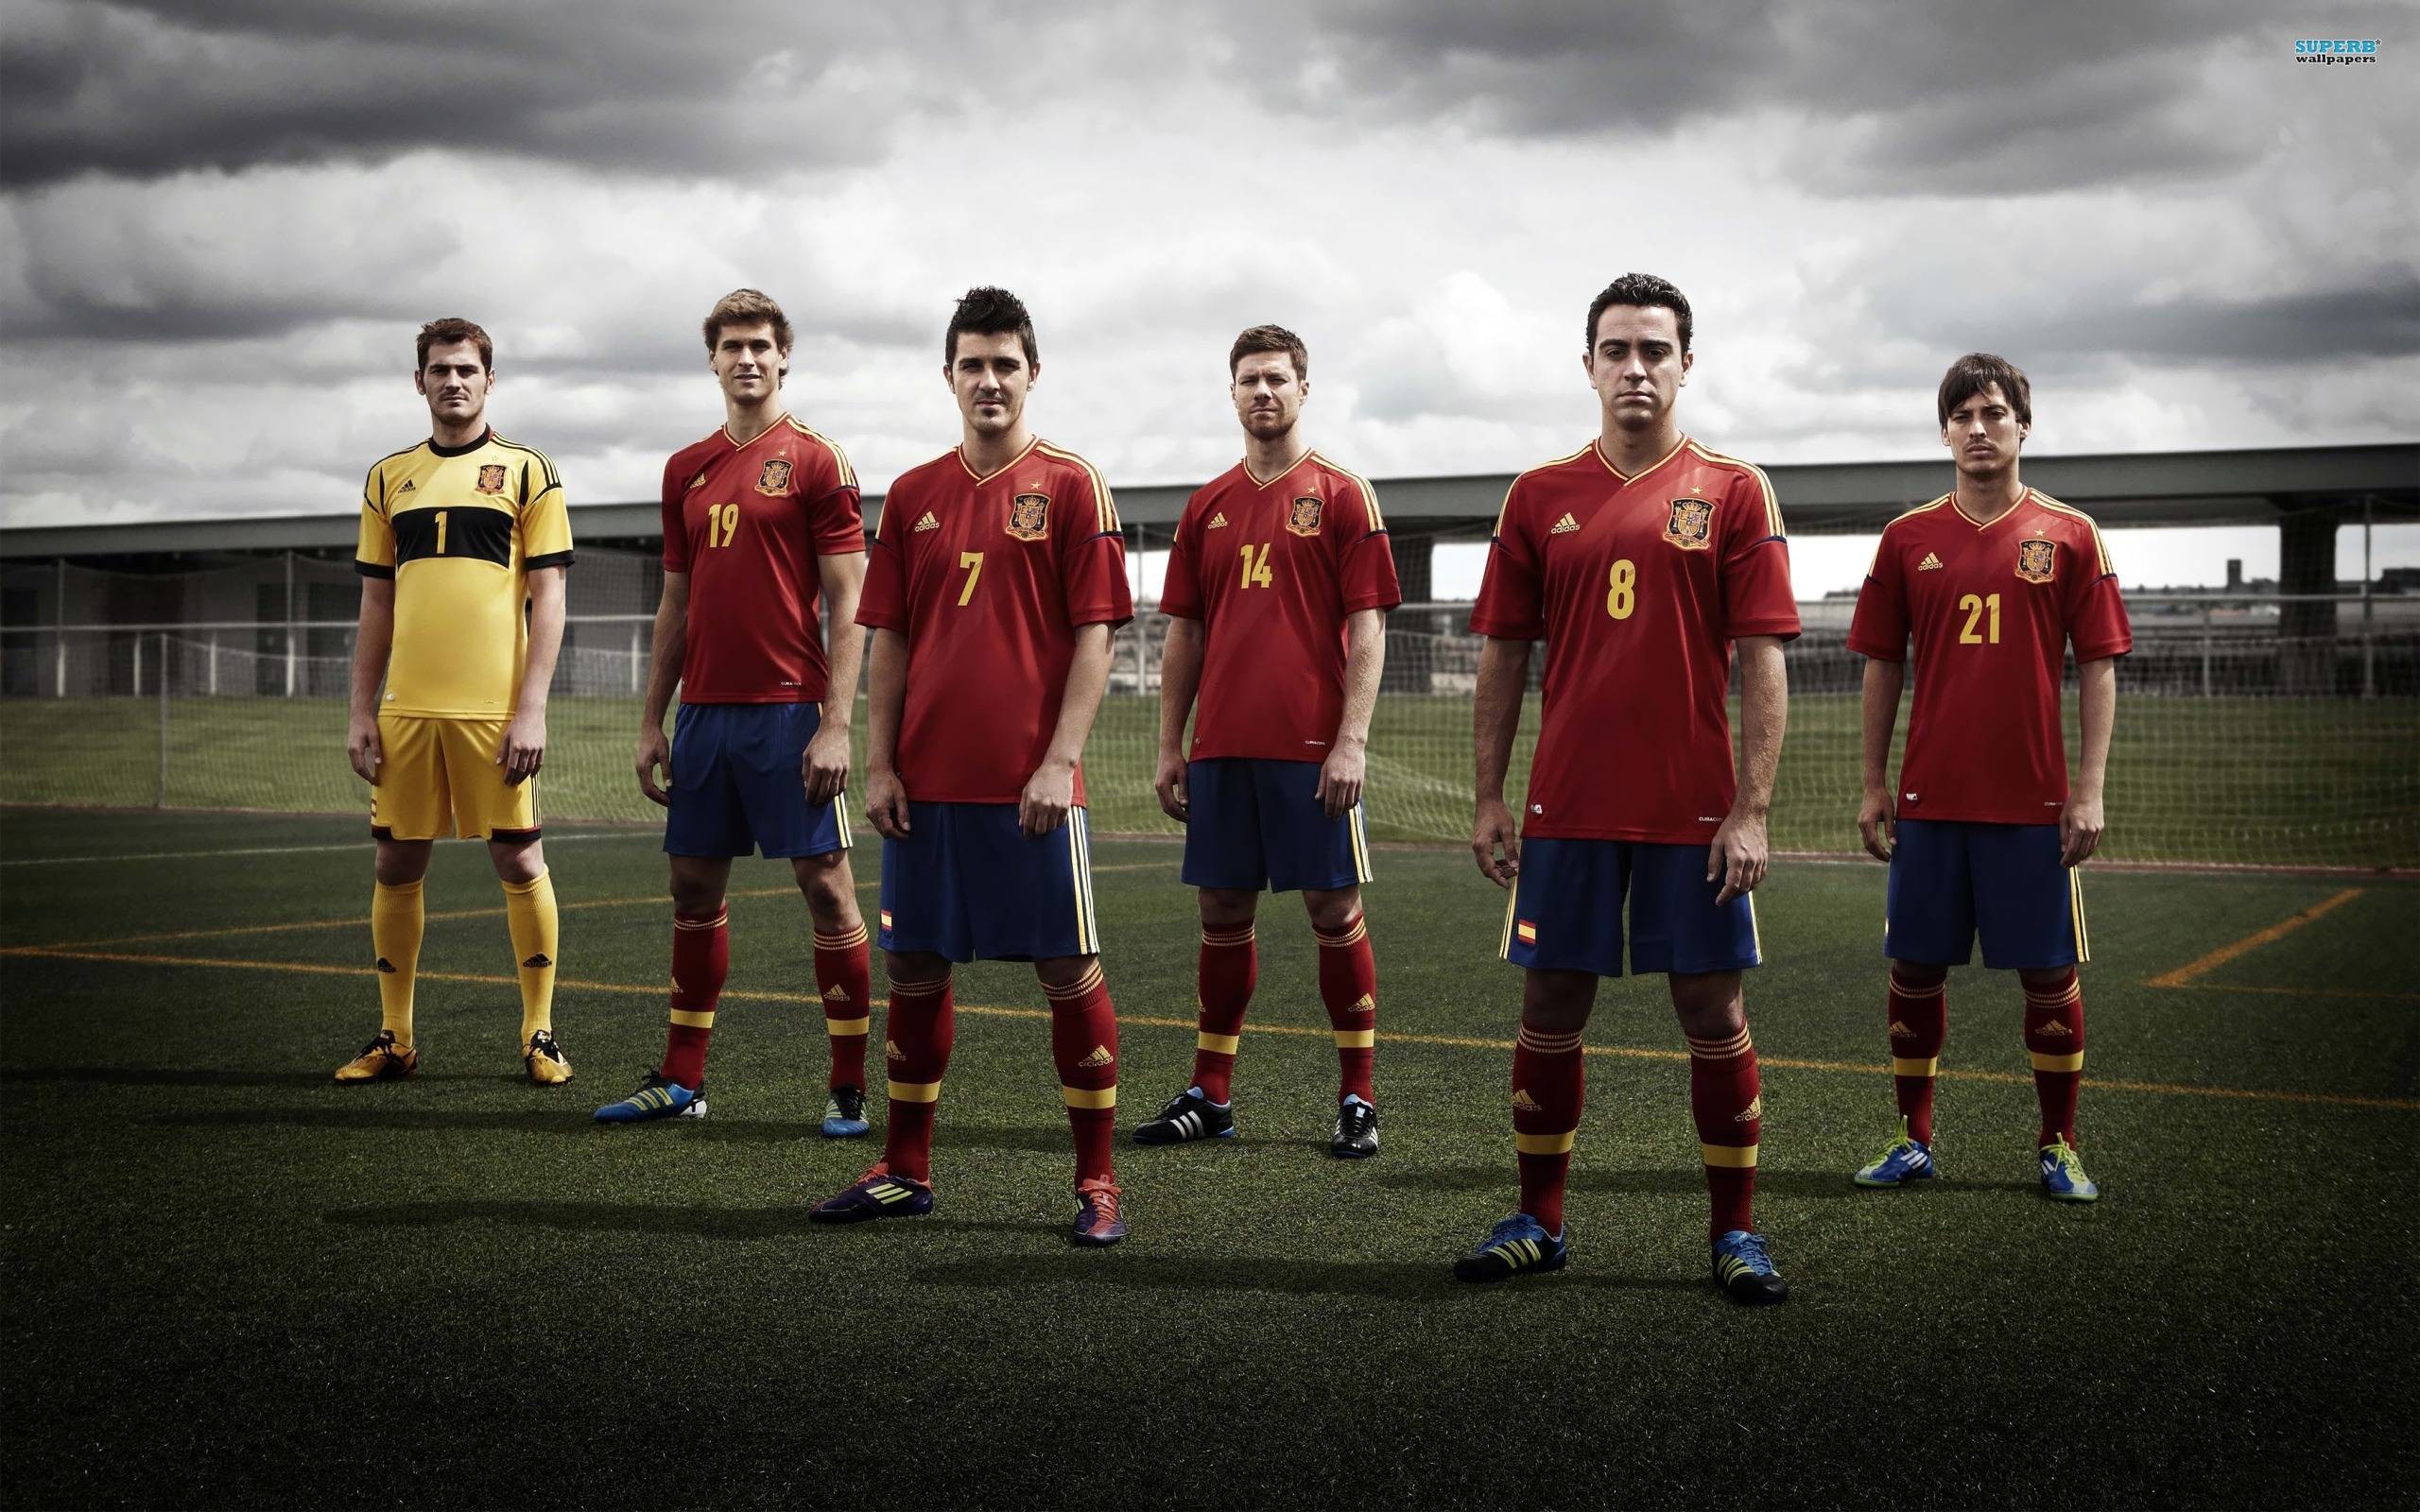 2560x1600 Spain national football team 2012 wallpaper - Sport wallpapers - #